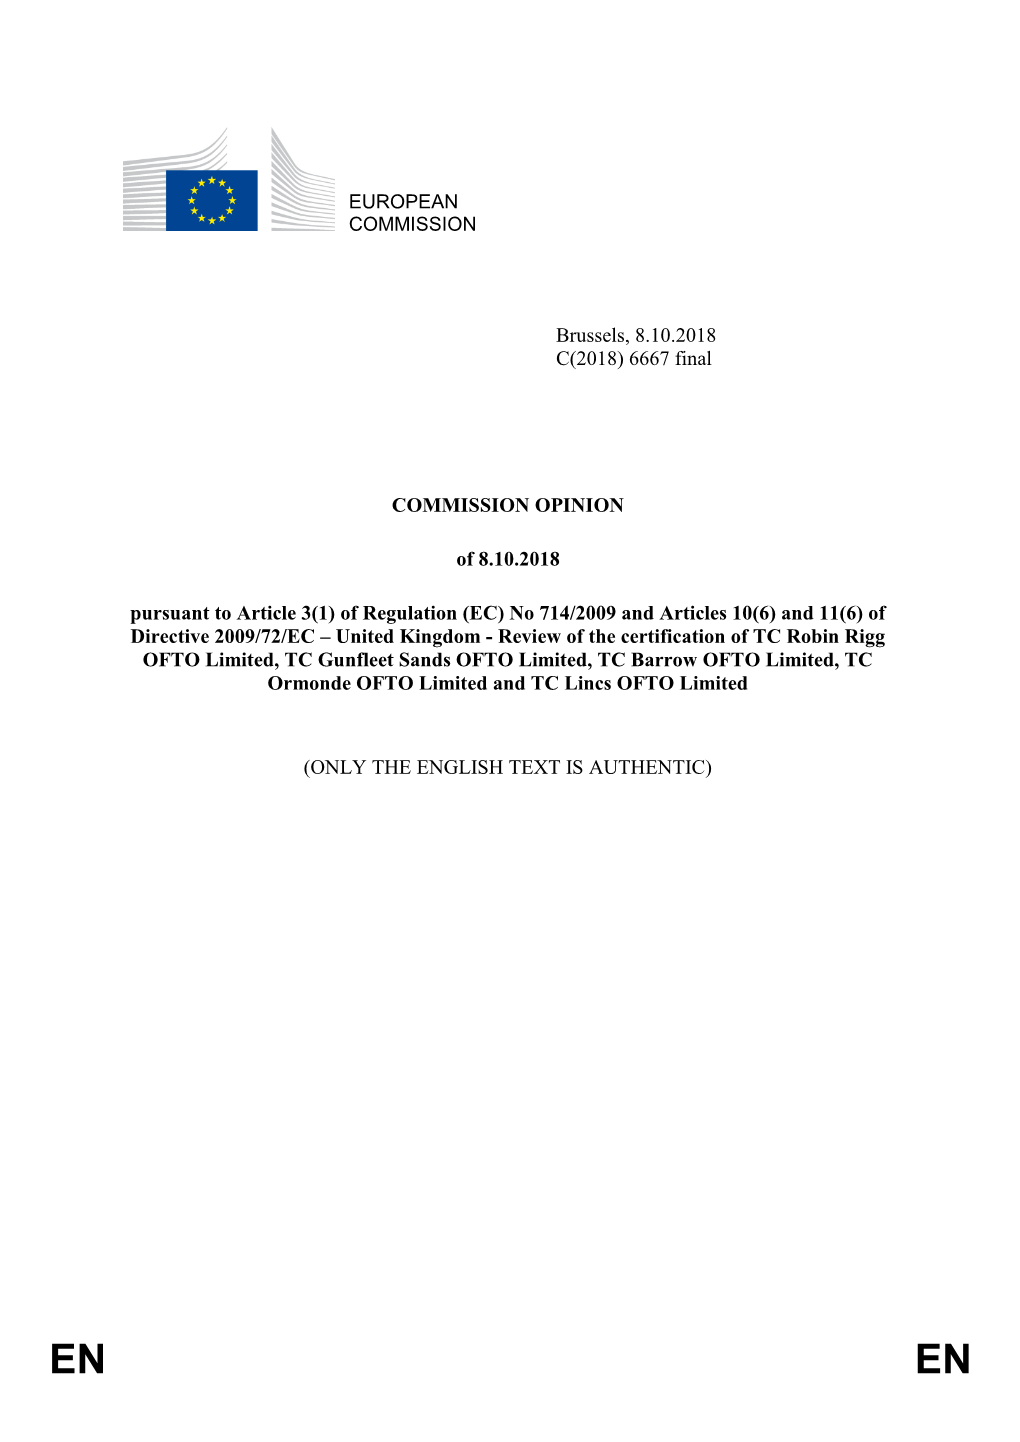 EUROPEAN COMMISSION Brussels, 8.10.2018 C(2018) 6667 Final